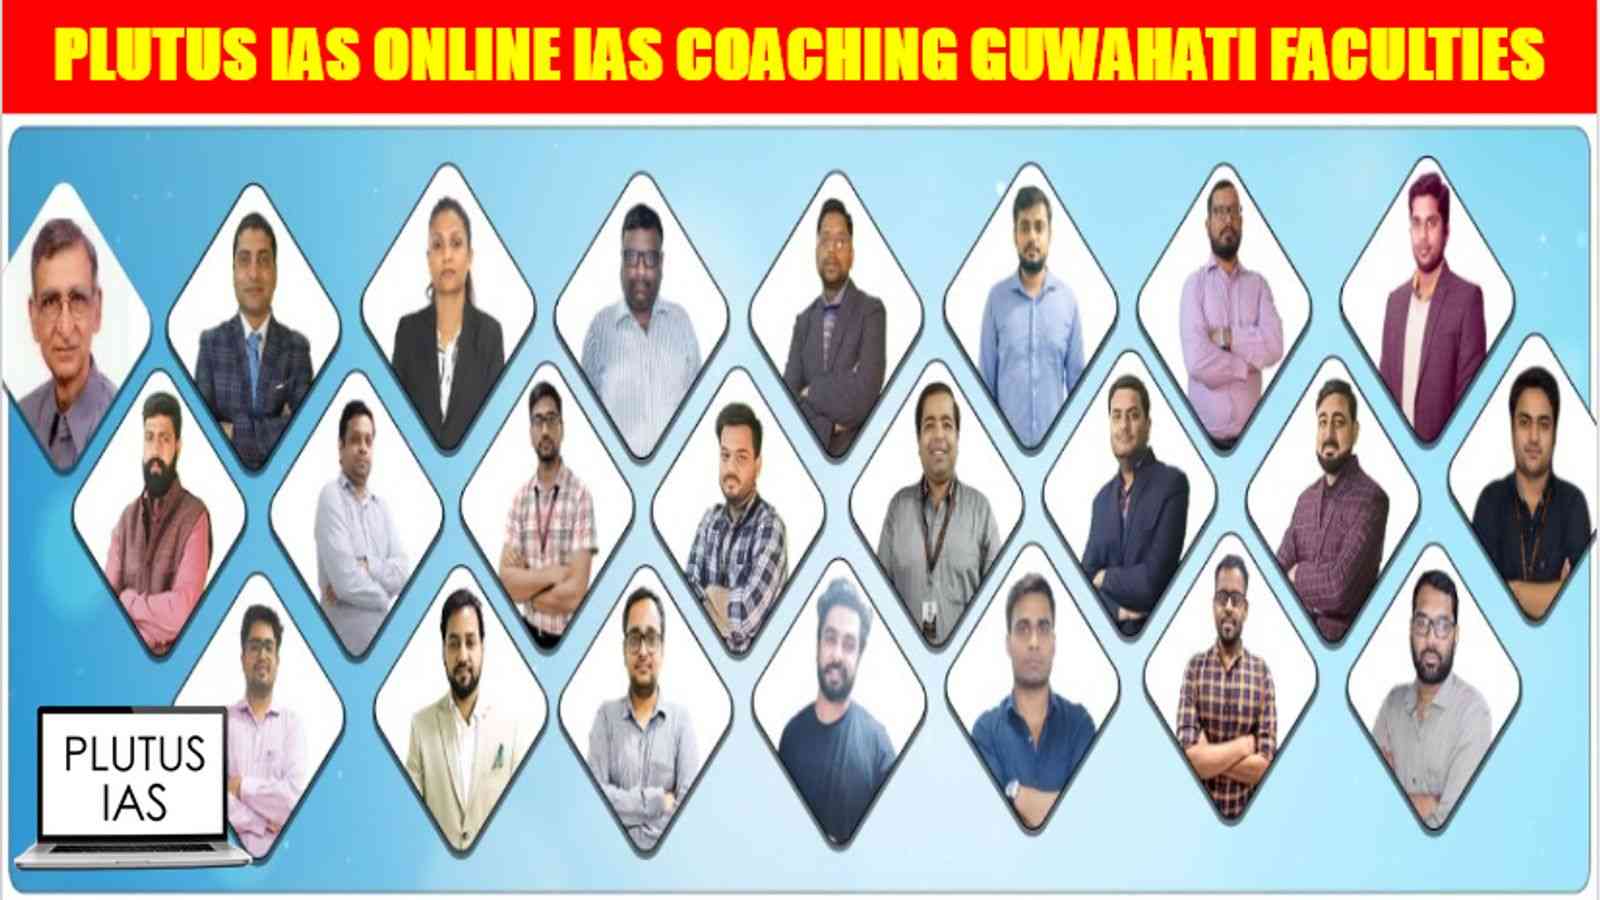 Plutus IAS Online Coaching Guwahati Fculties